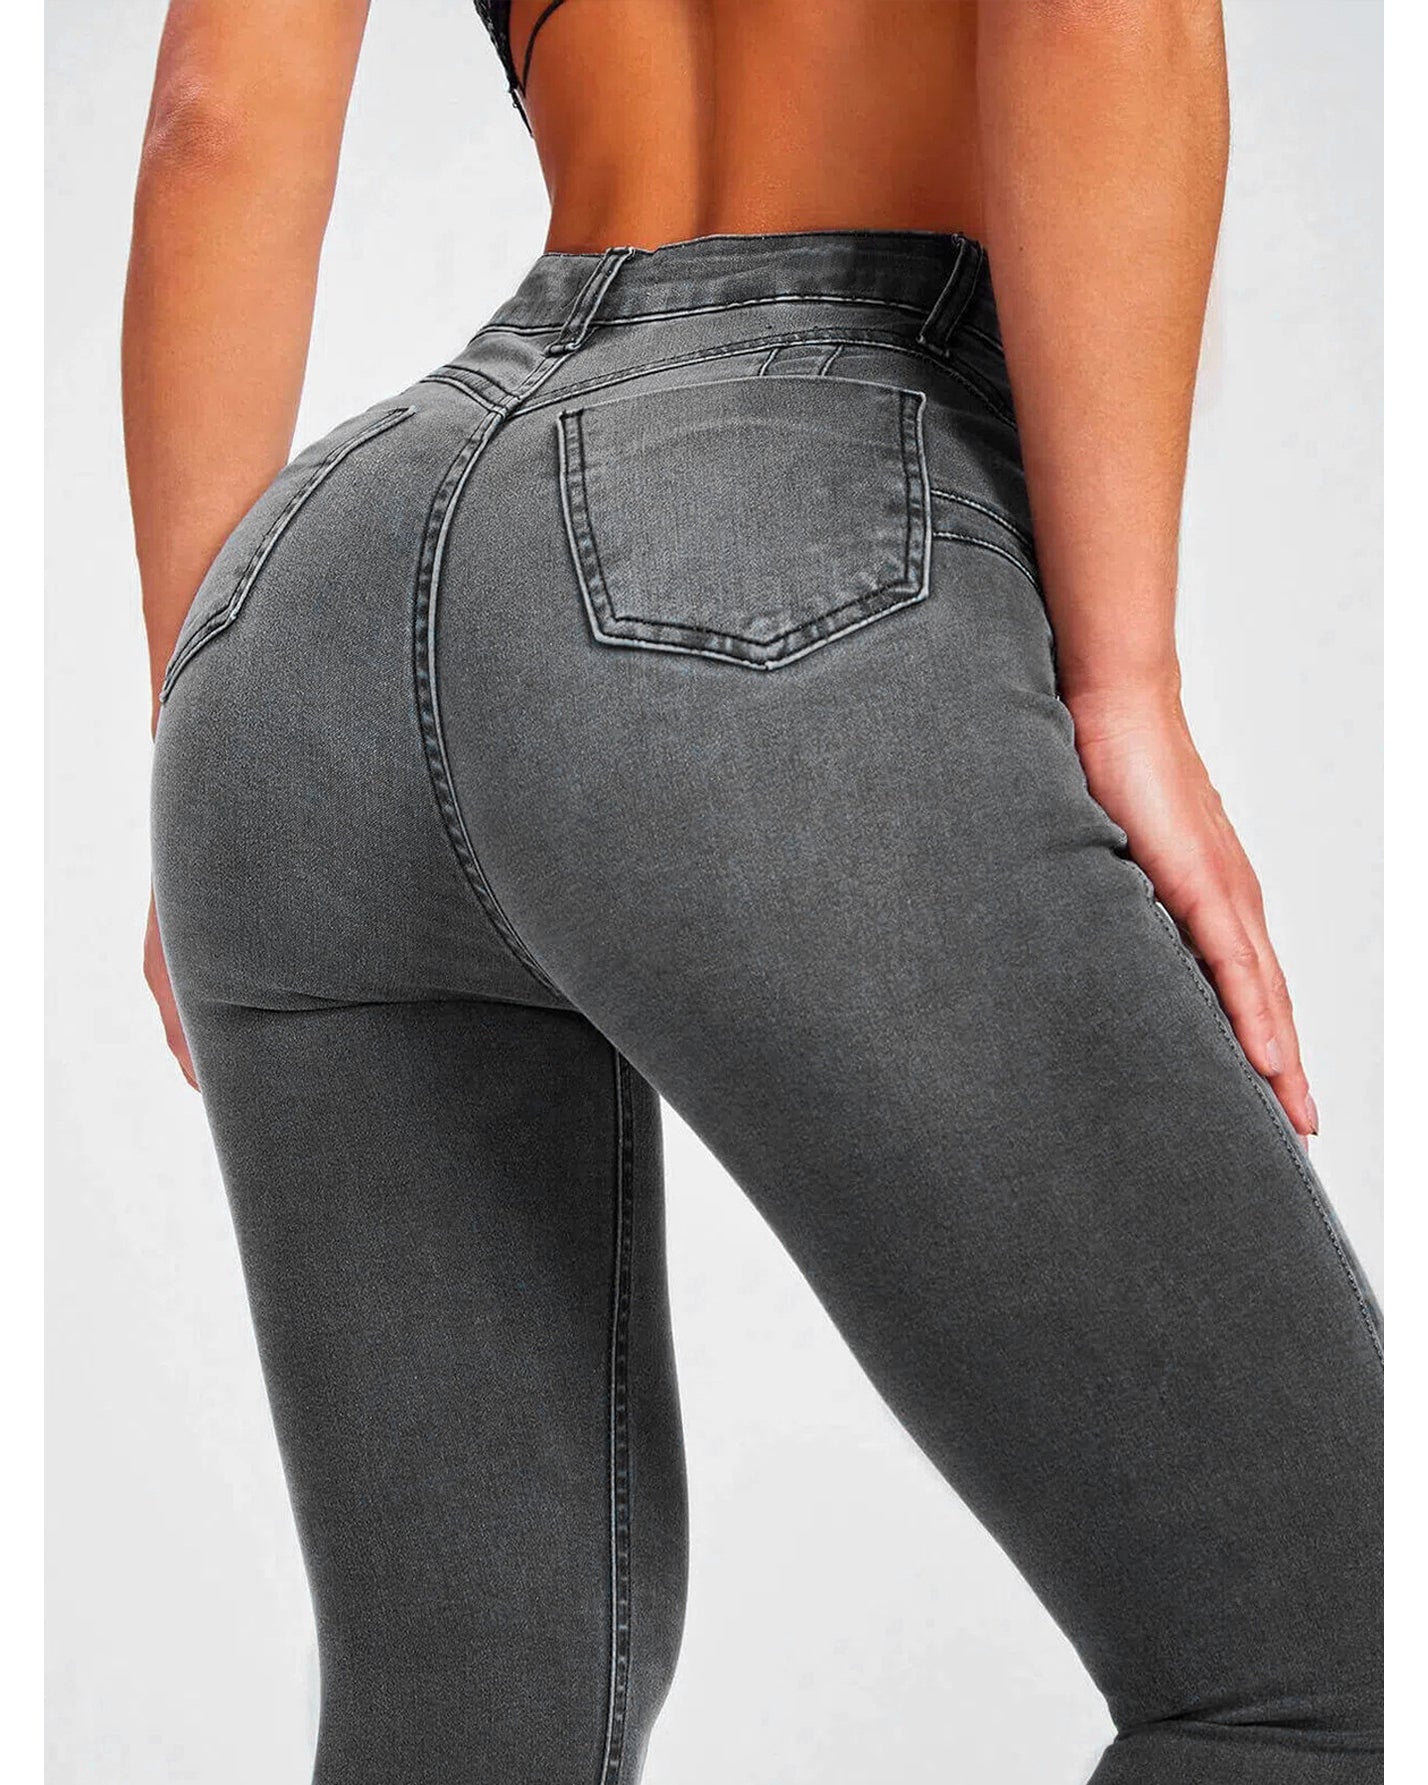 Damen Skinny Slim Fit Stretch Denim Jeans